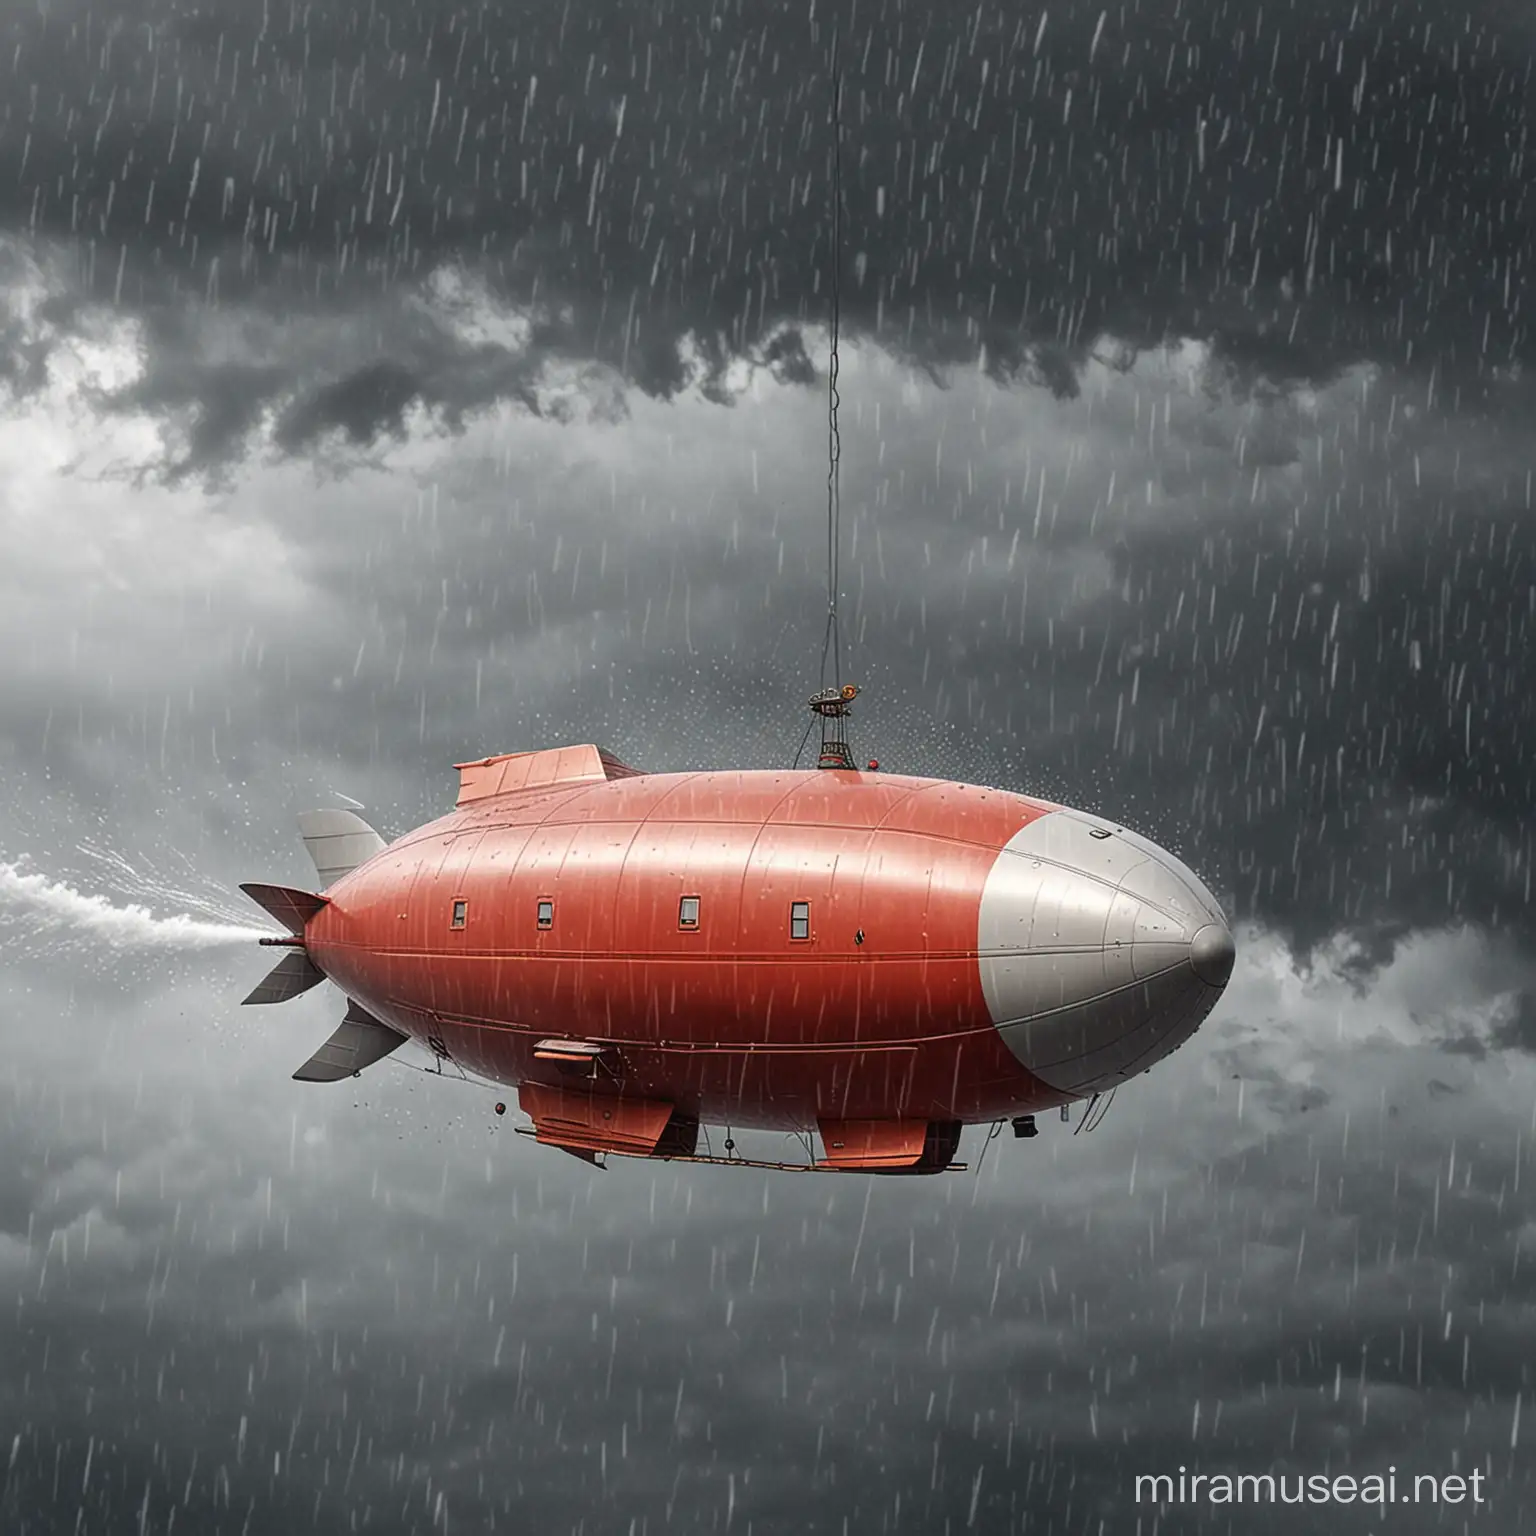 Cartoon Air Blimp Battling Heavy Rain and Strong Winds